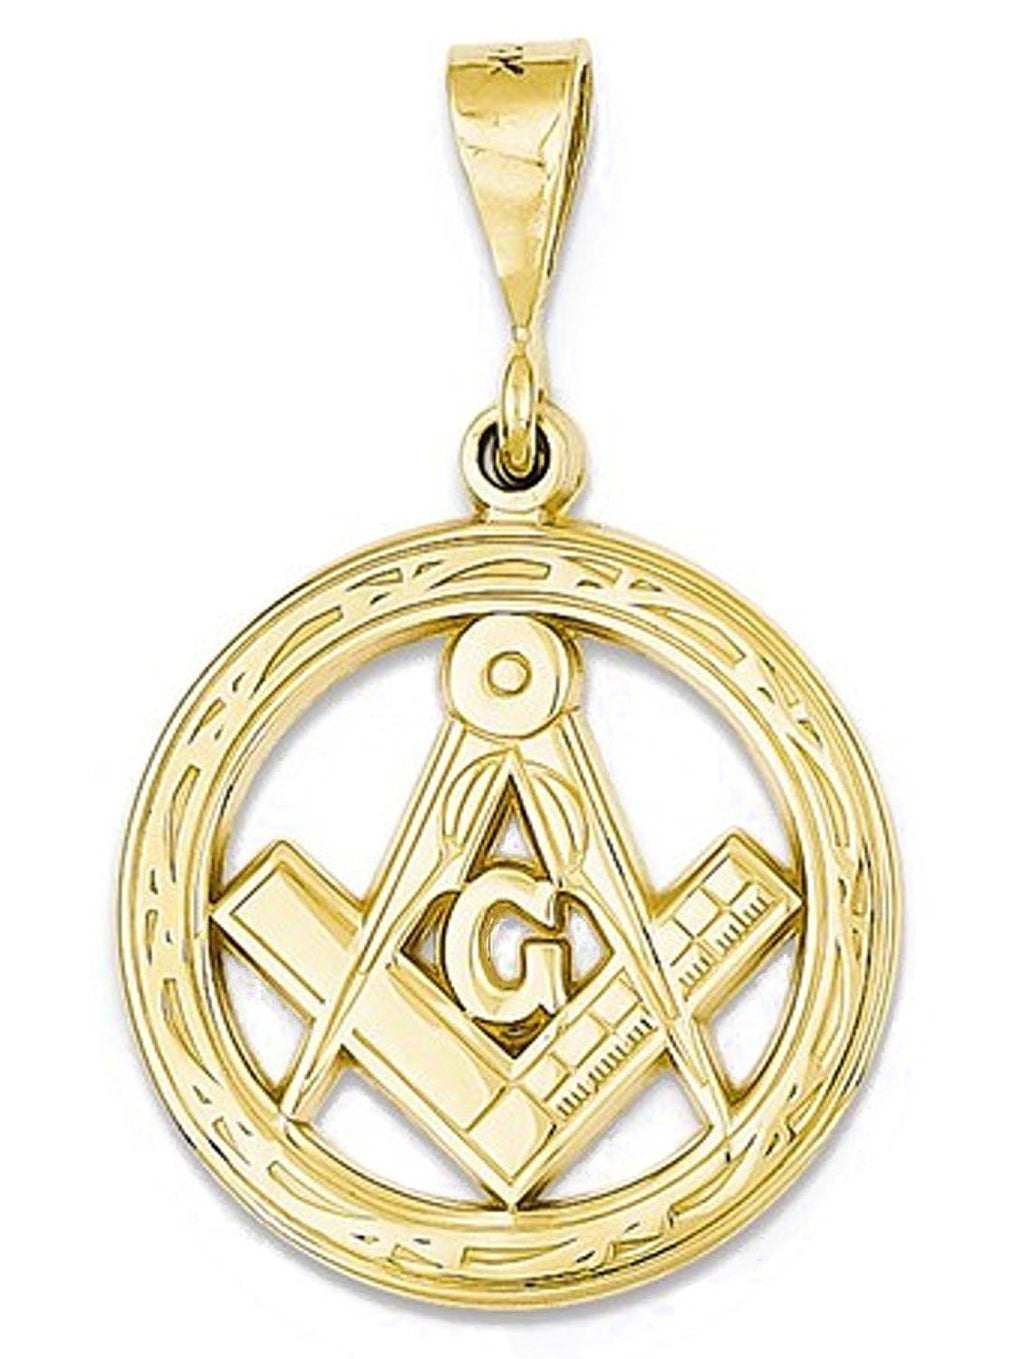 14k Yellow Gold Masonic Pendant Charm - [cklinternational]